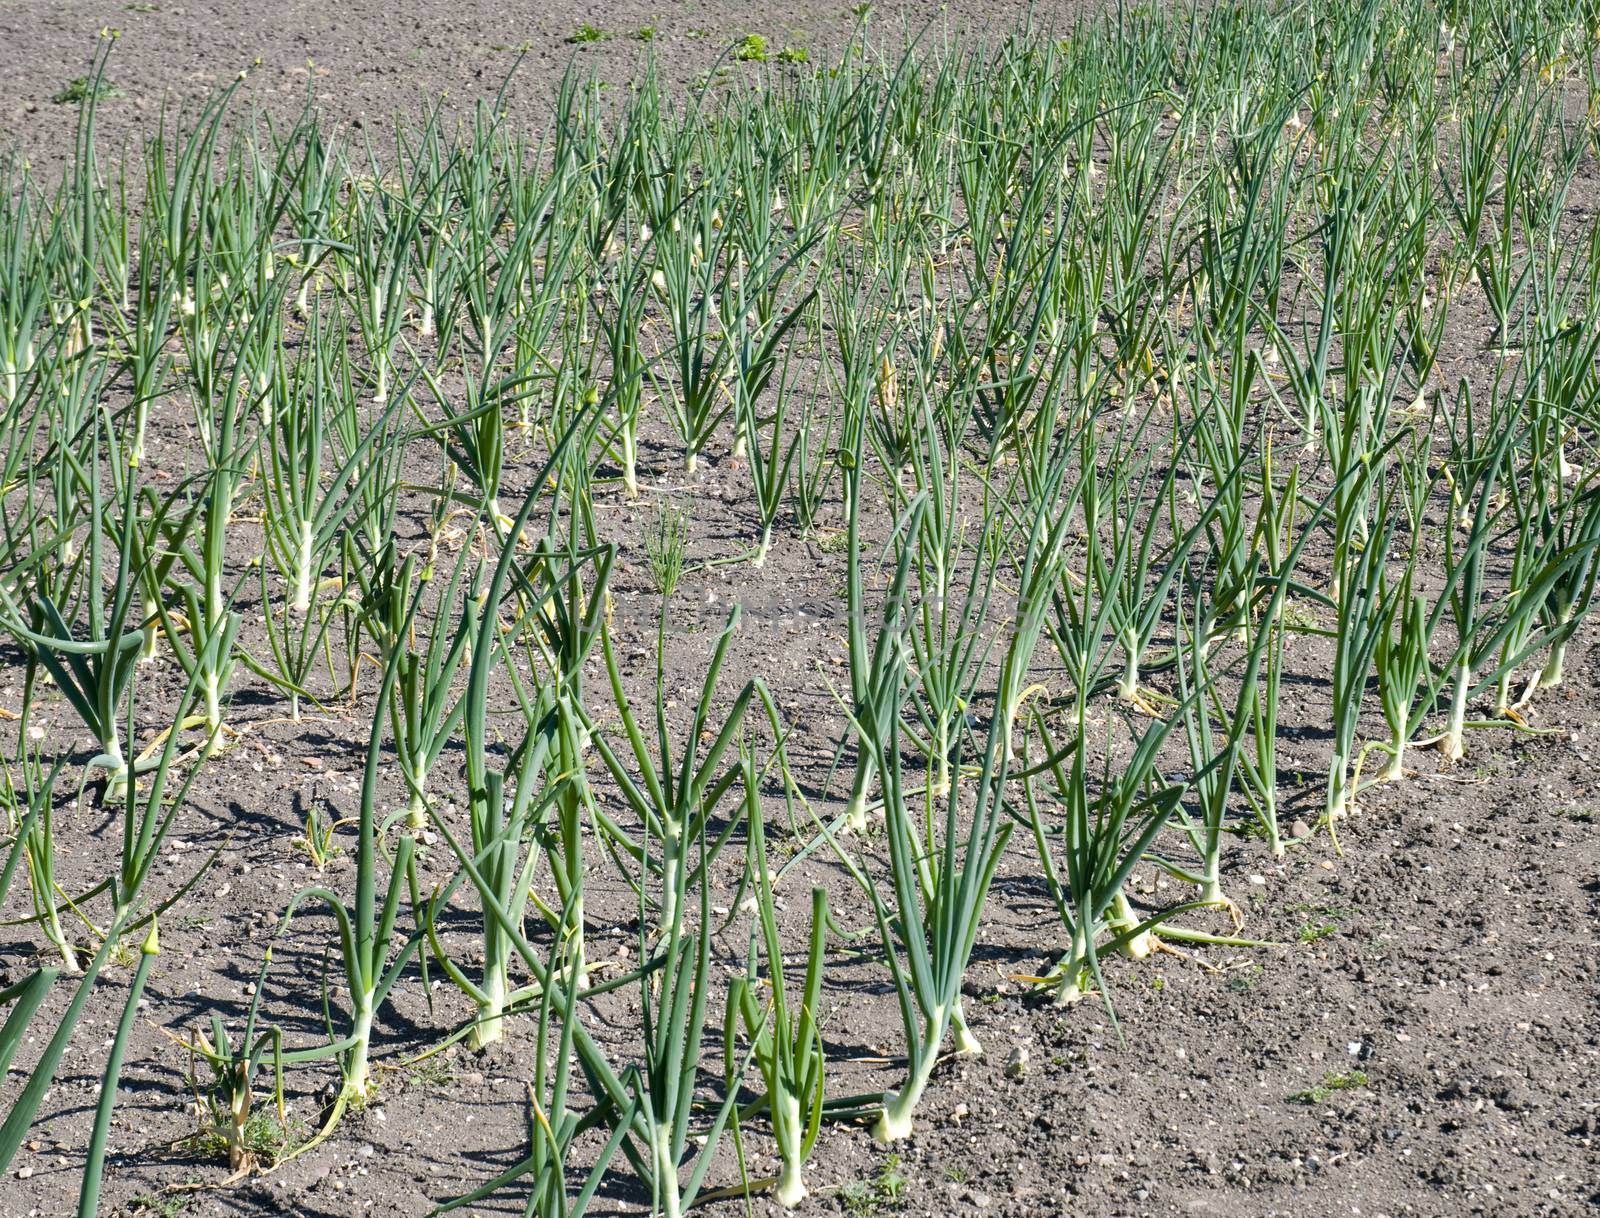 A field of growing onions